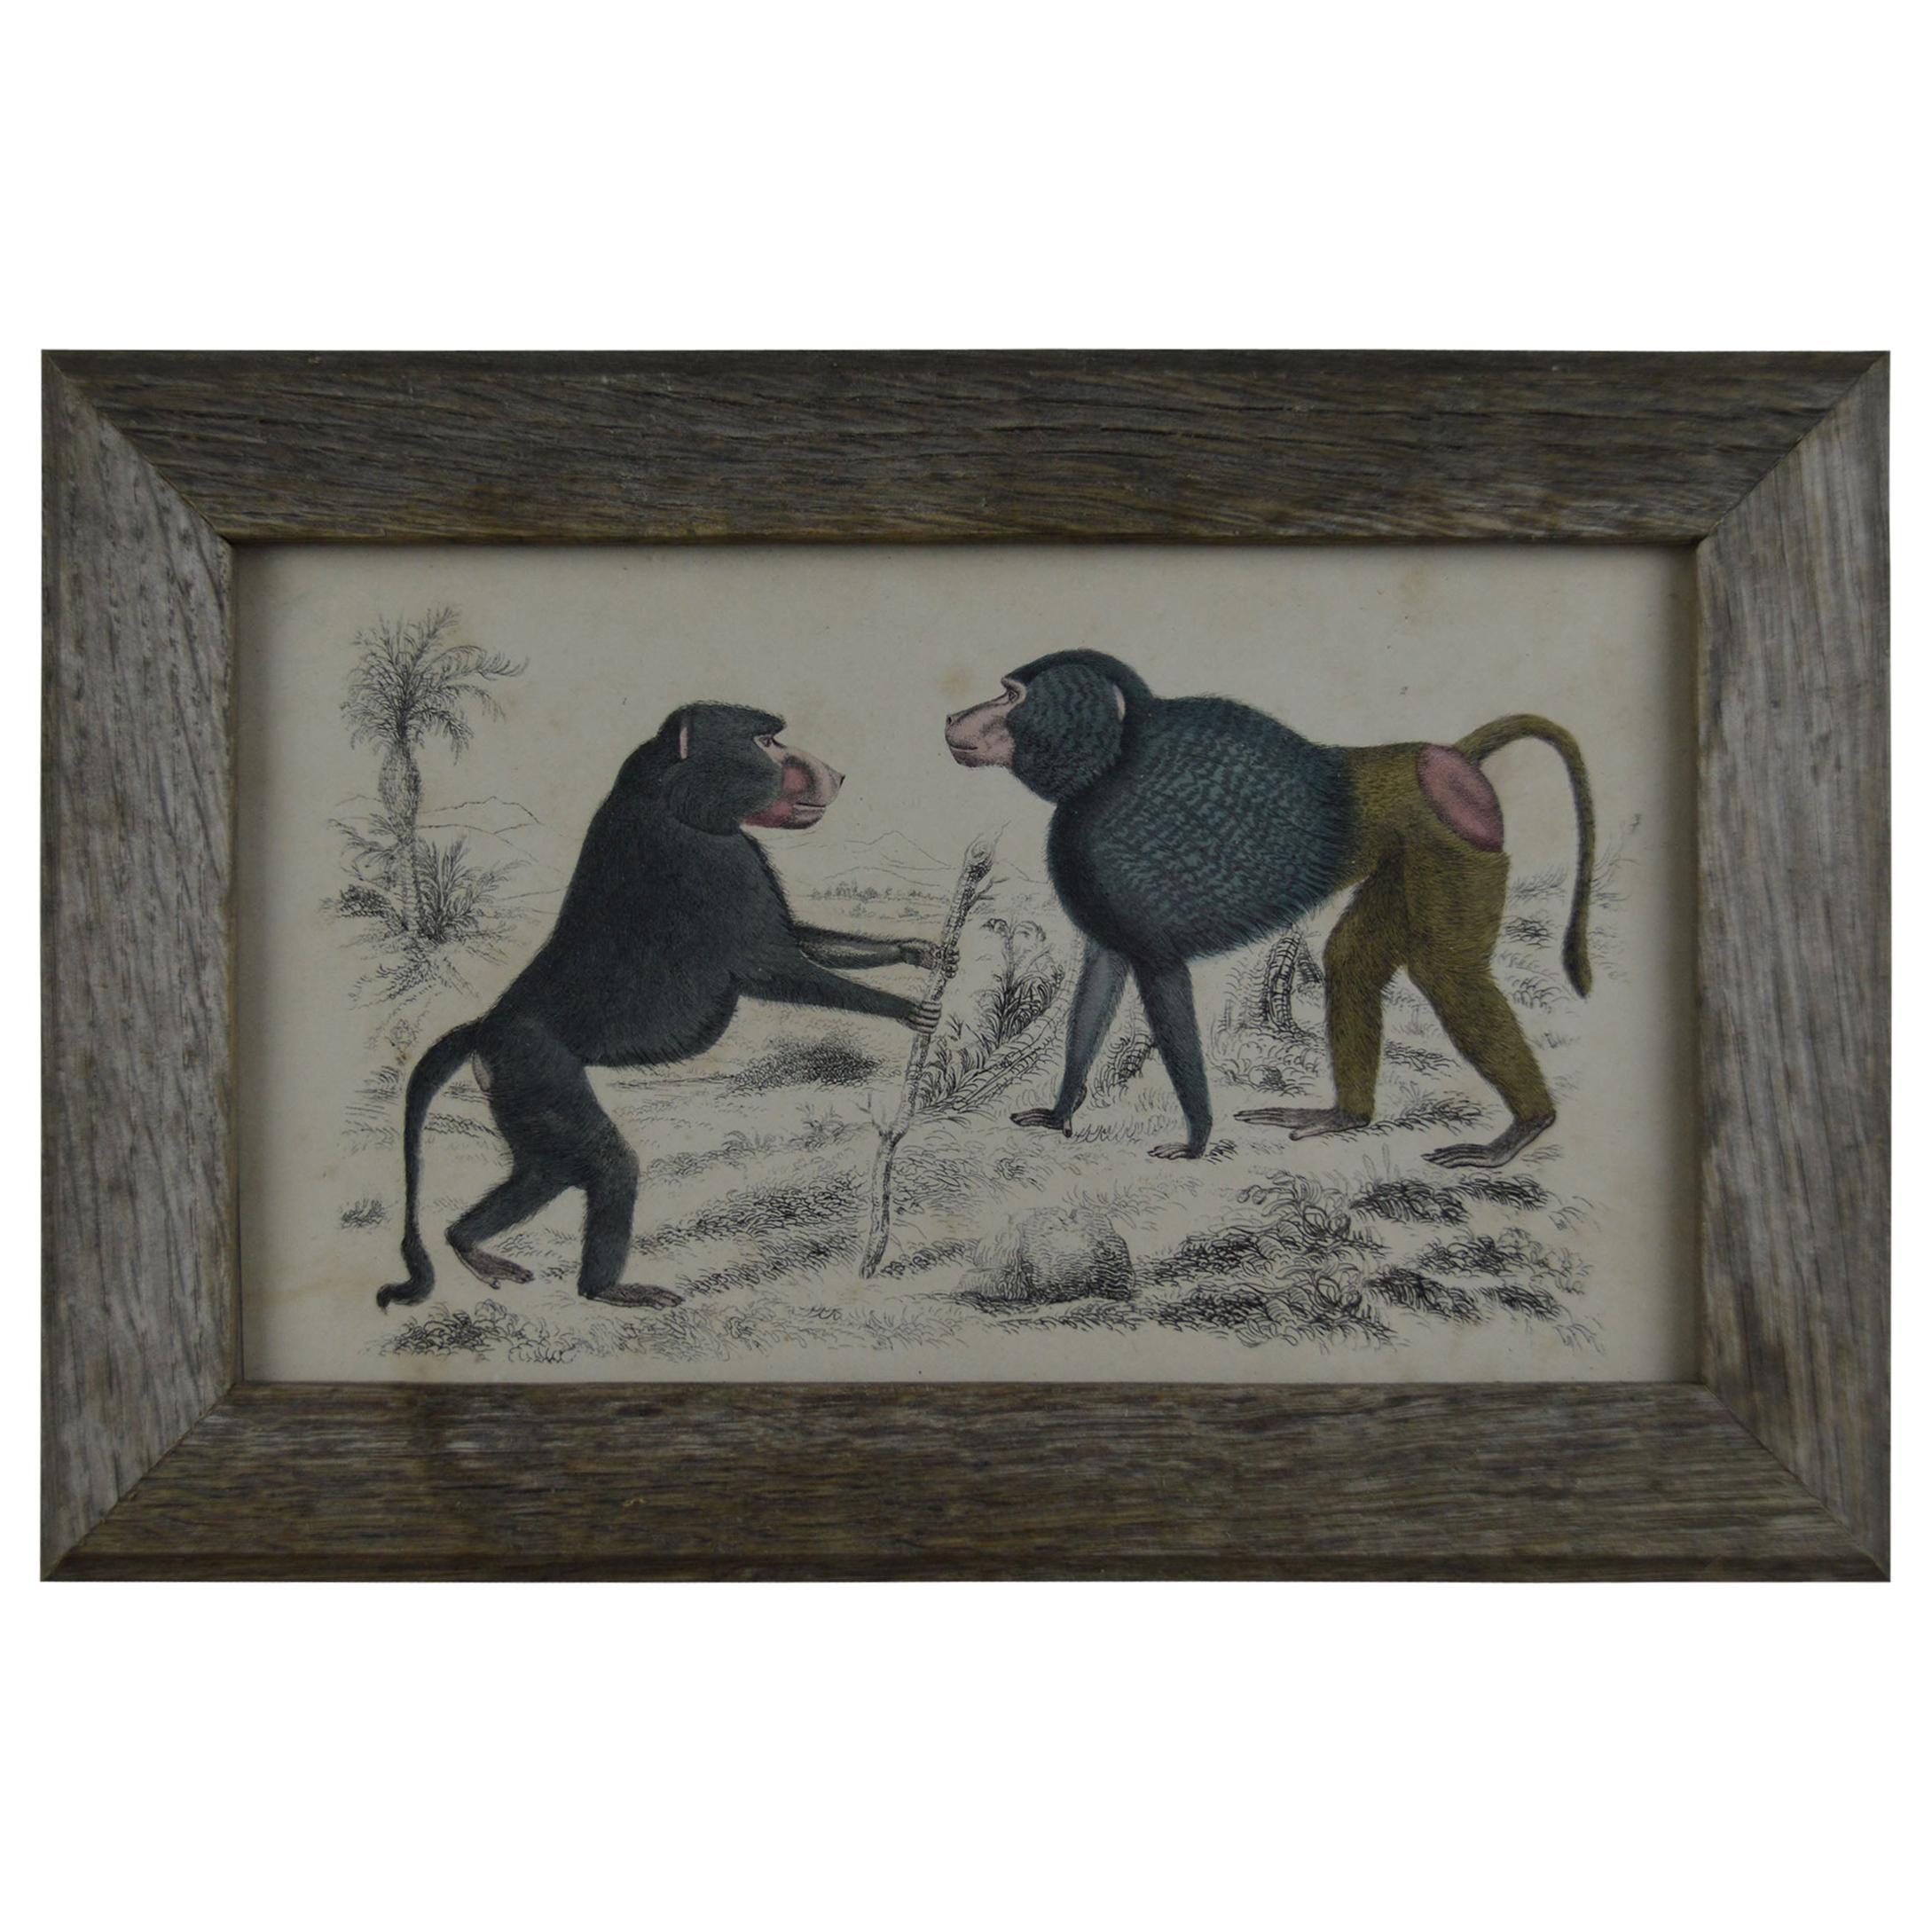 Original Antique Print of Monkeys, 1847